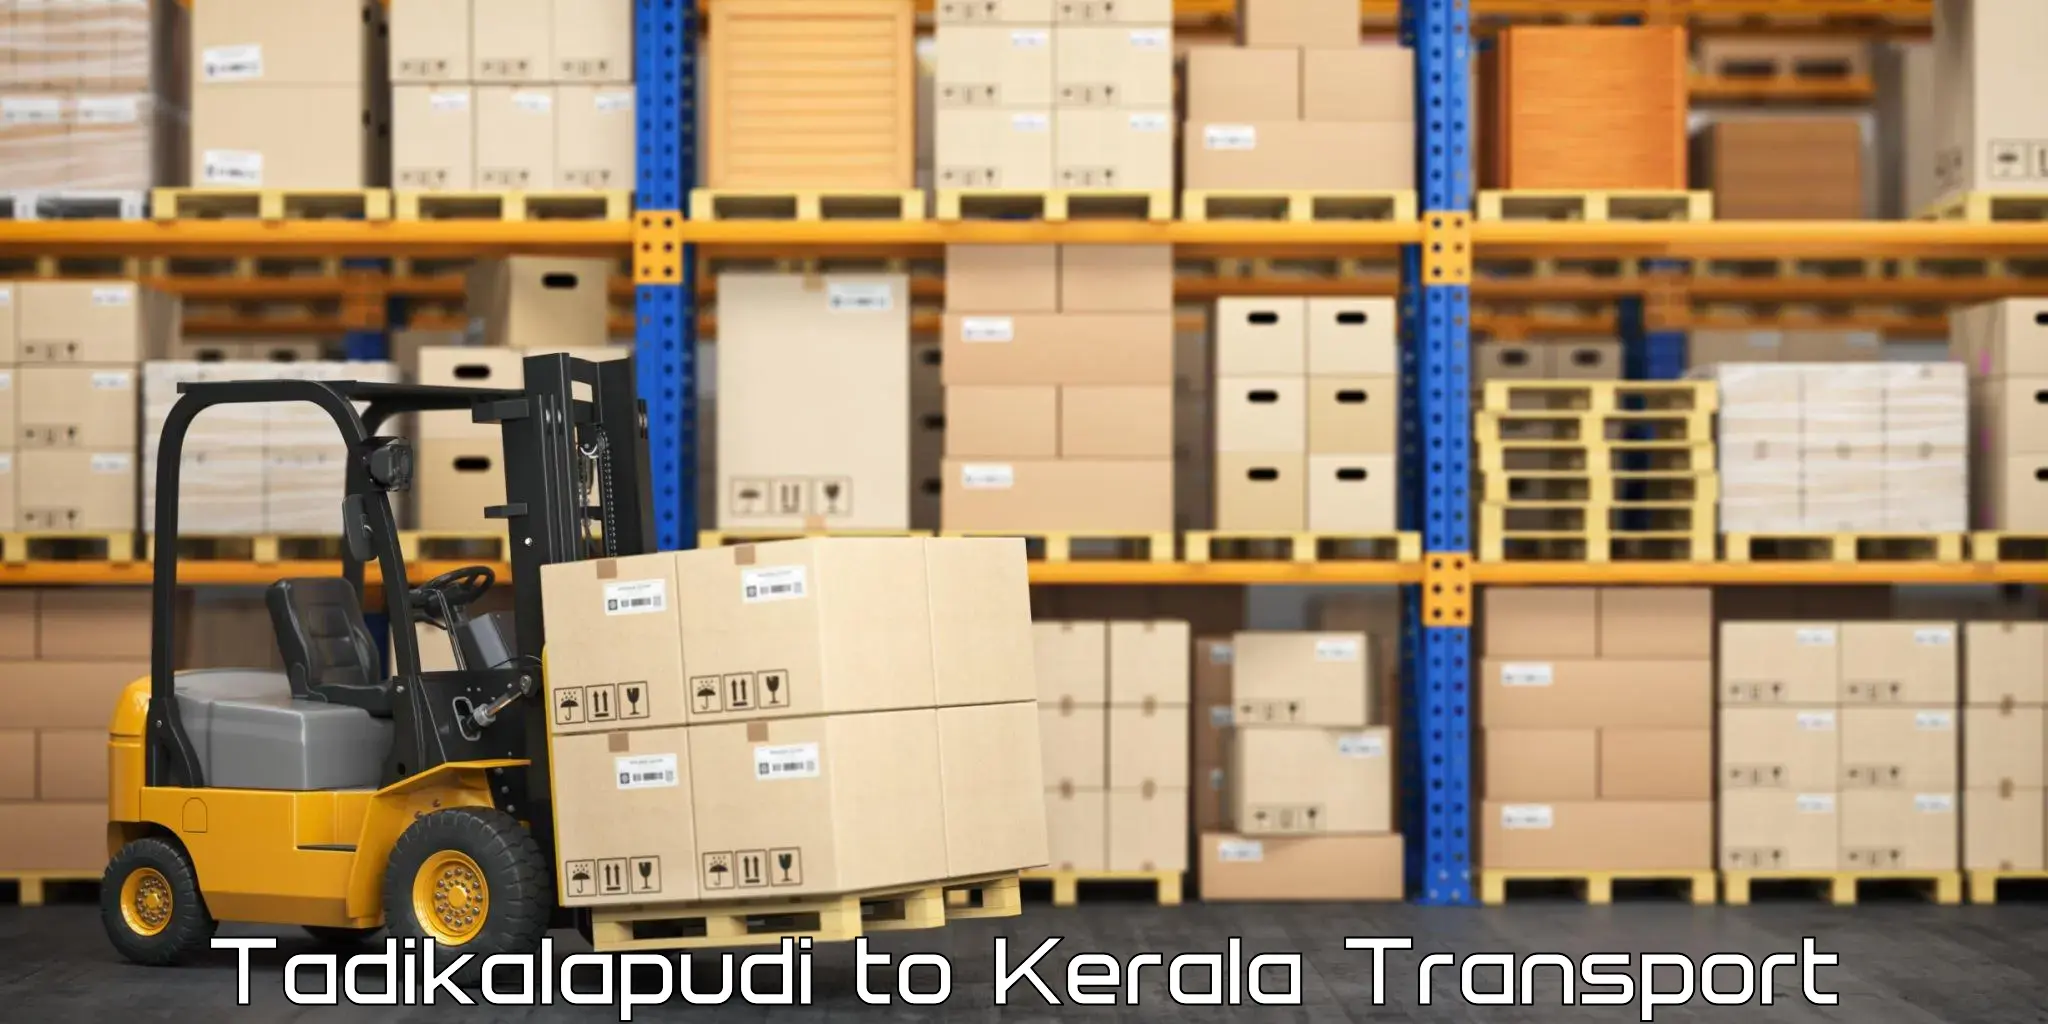 Commercial transport service Tadikalapudi to Kochi